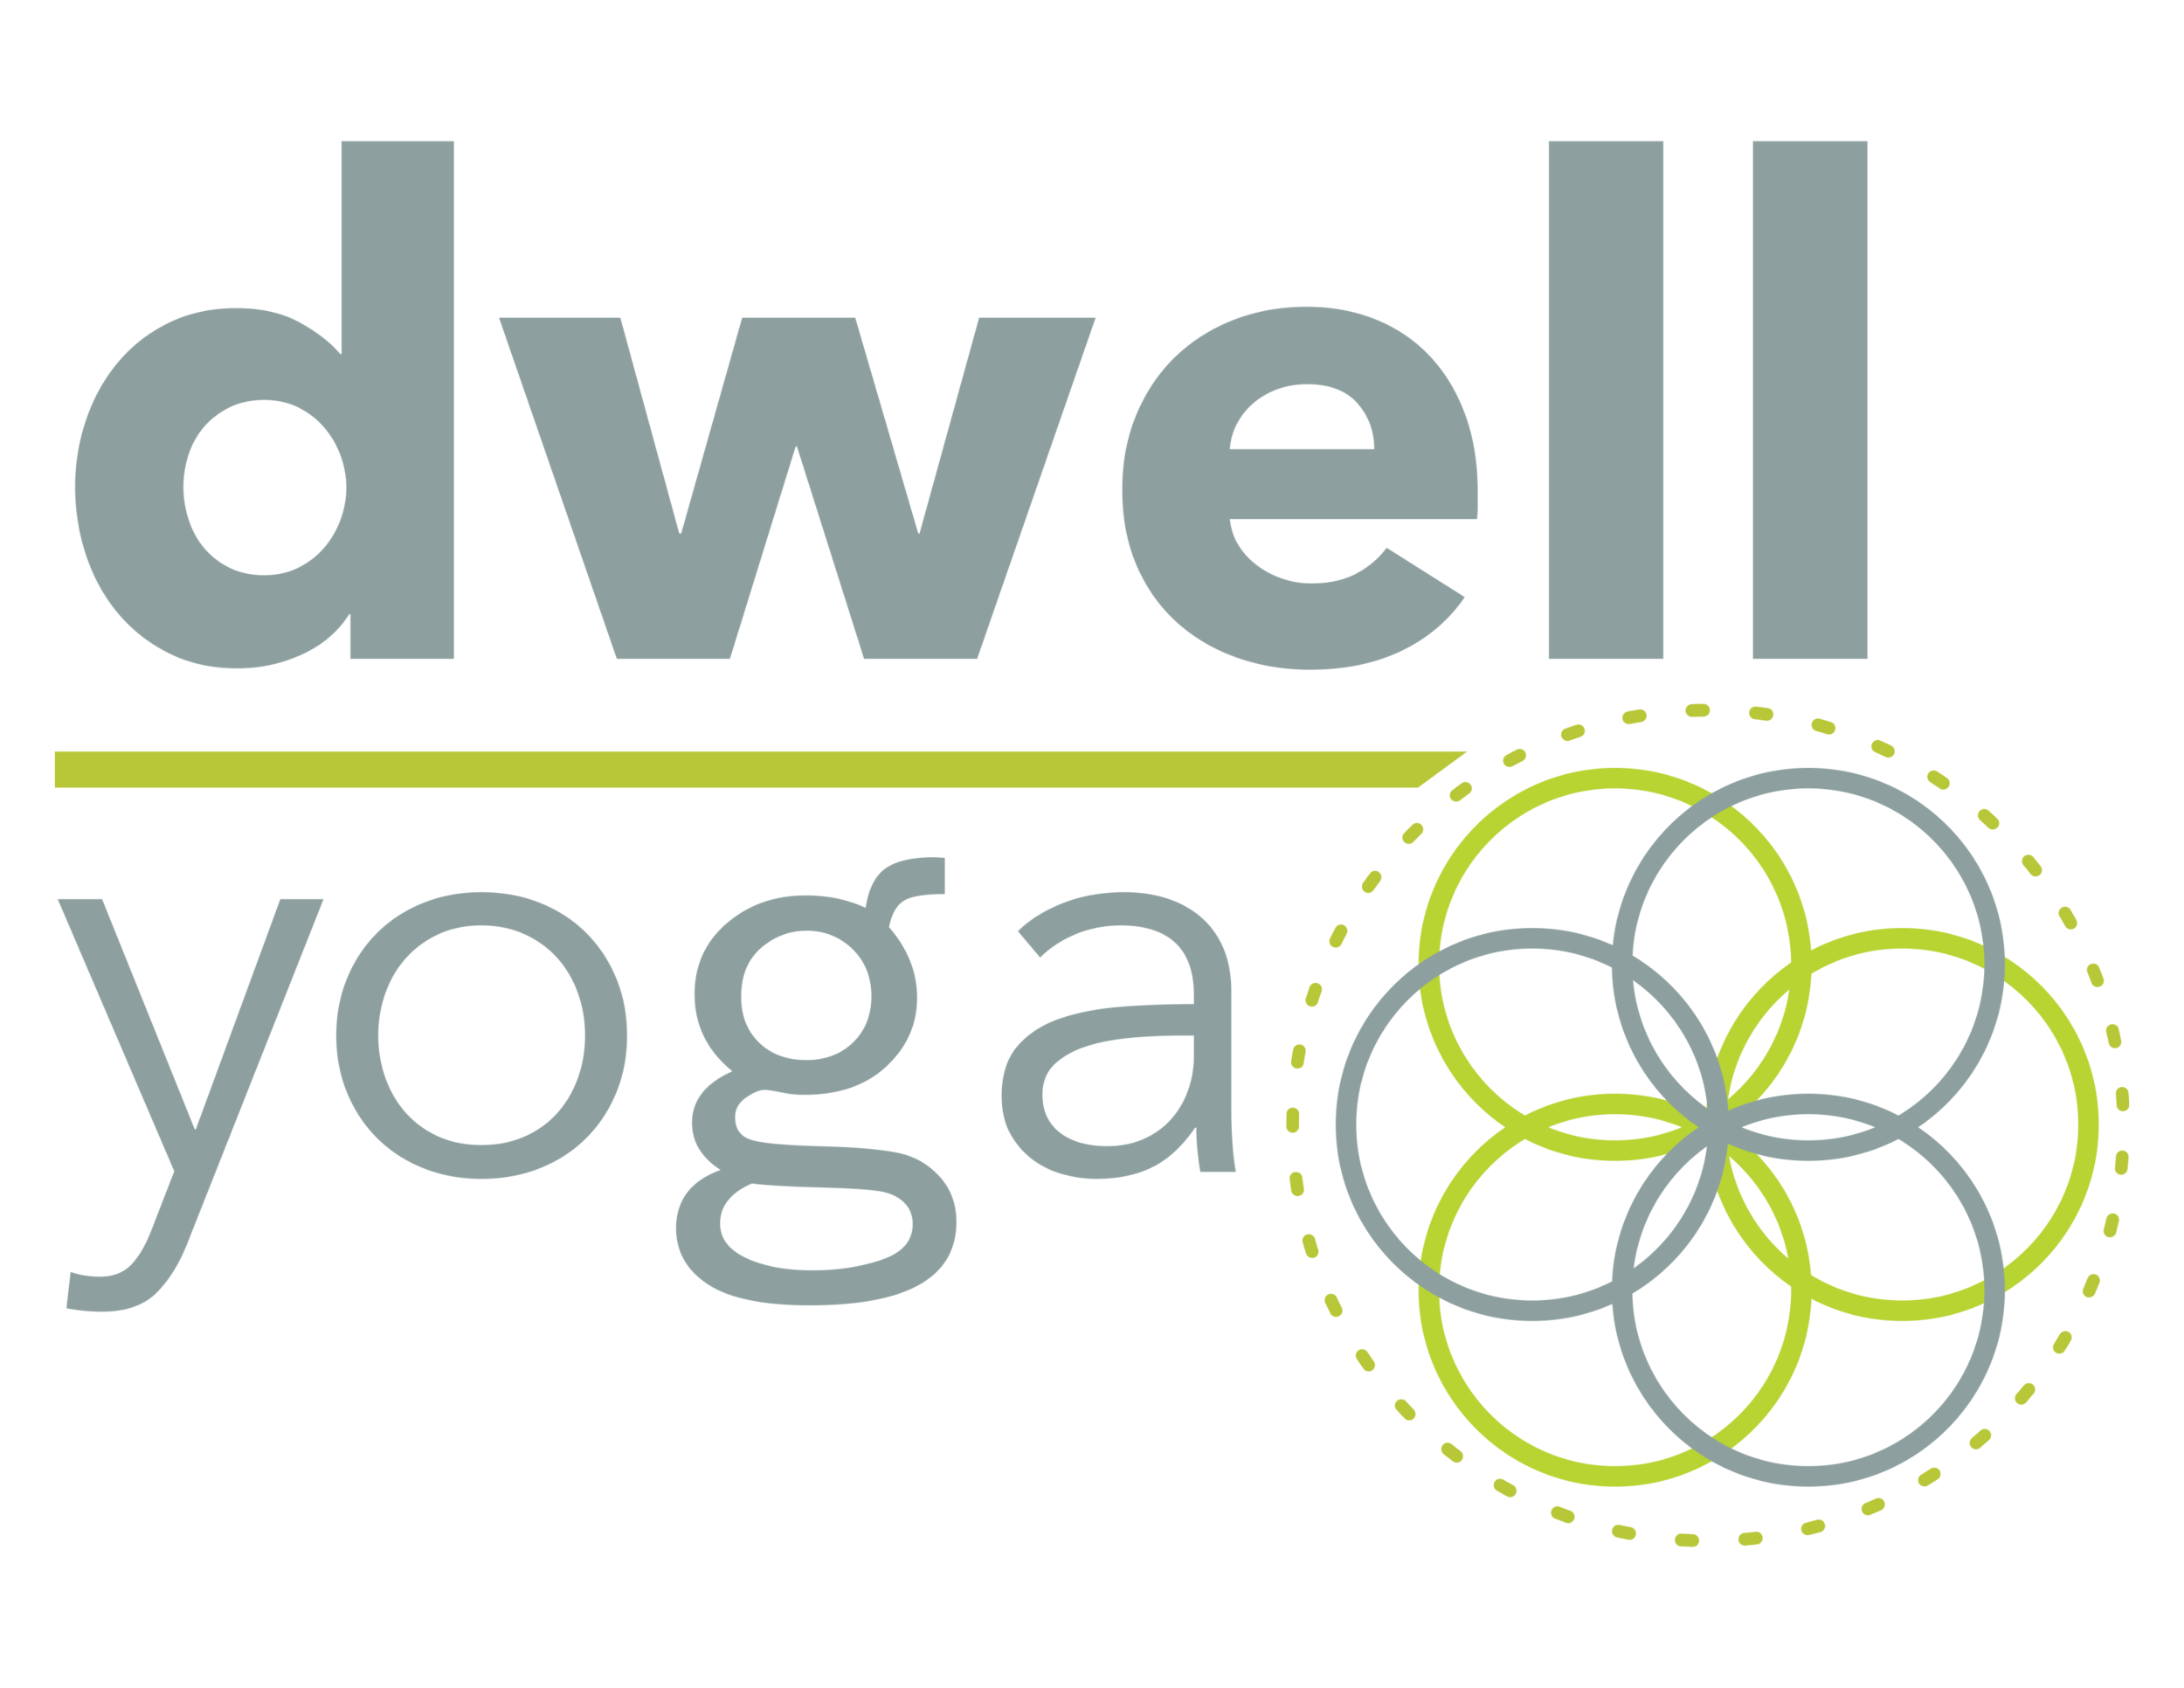 Dwell Yoga